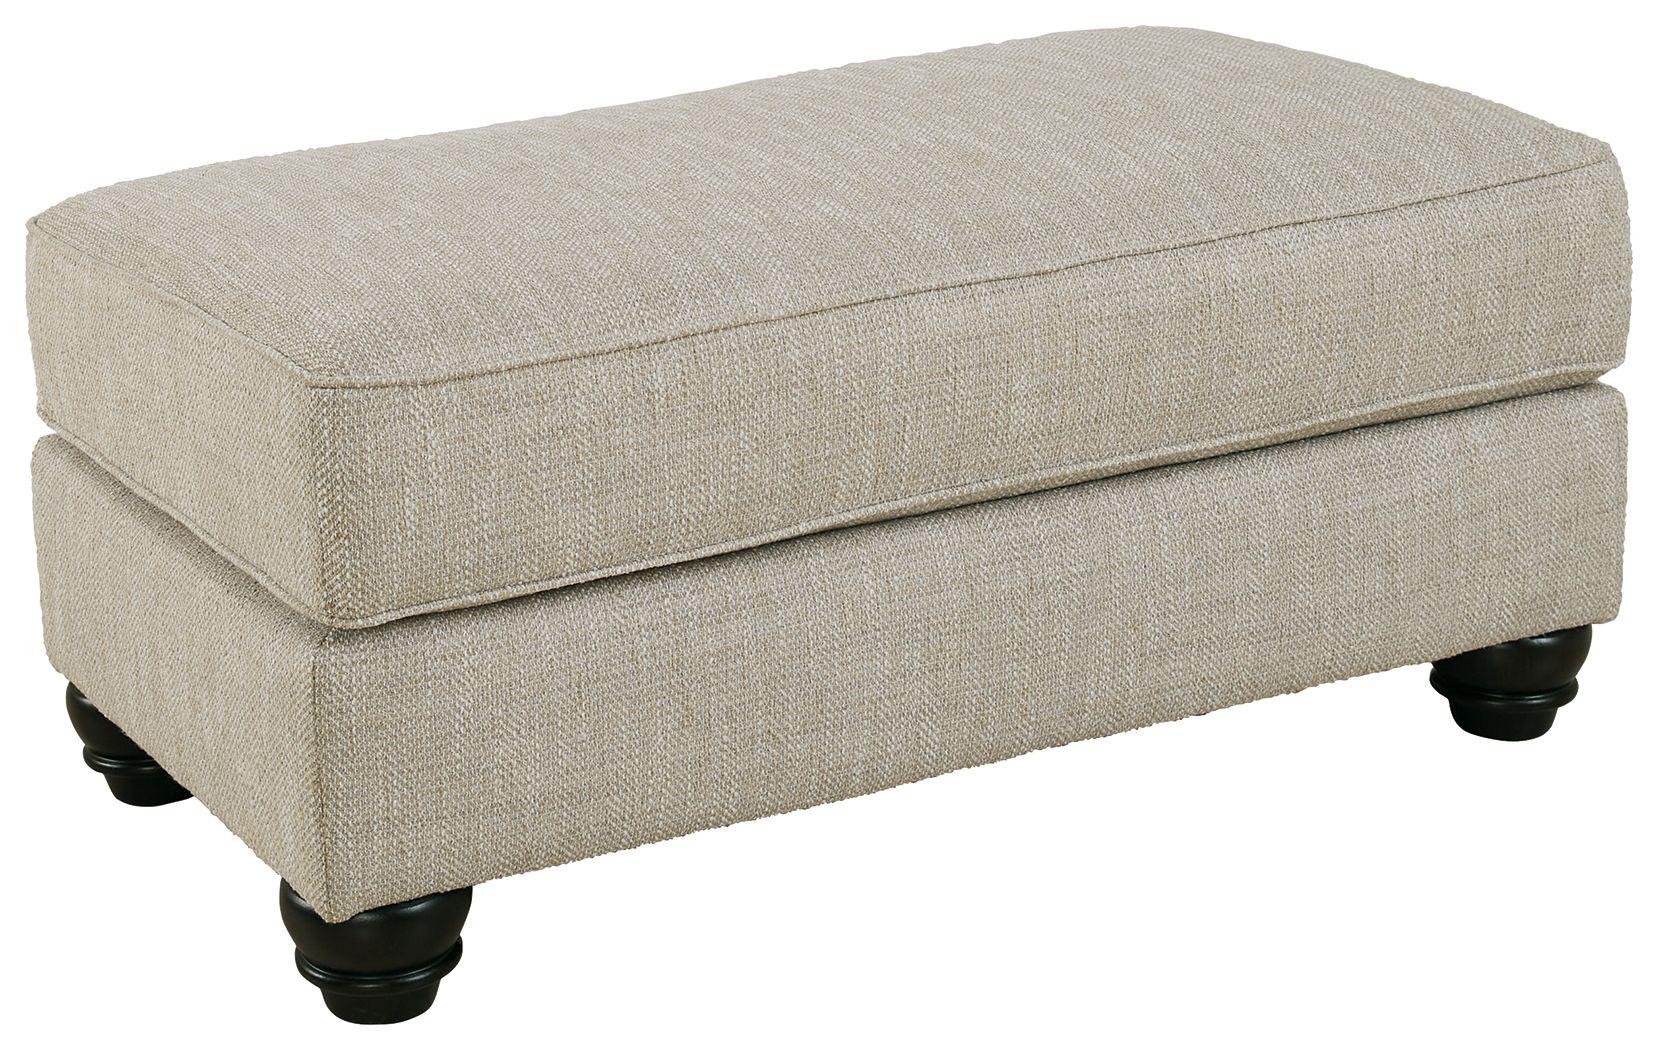 Benchcraft® - Asanti - Fog - Ottoman - 5th Avenue Furniture